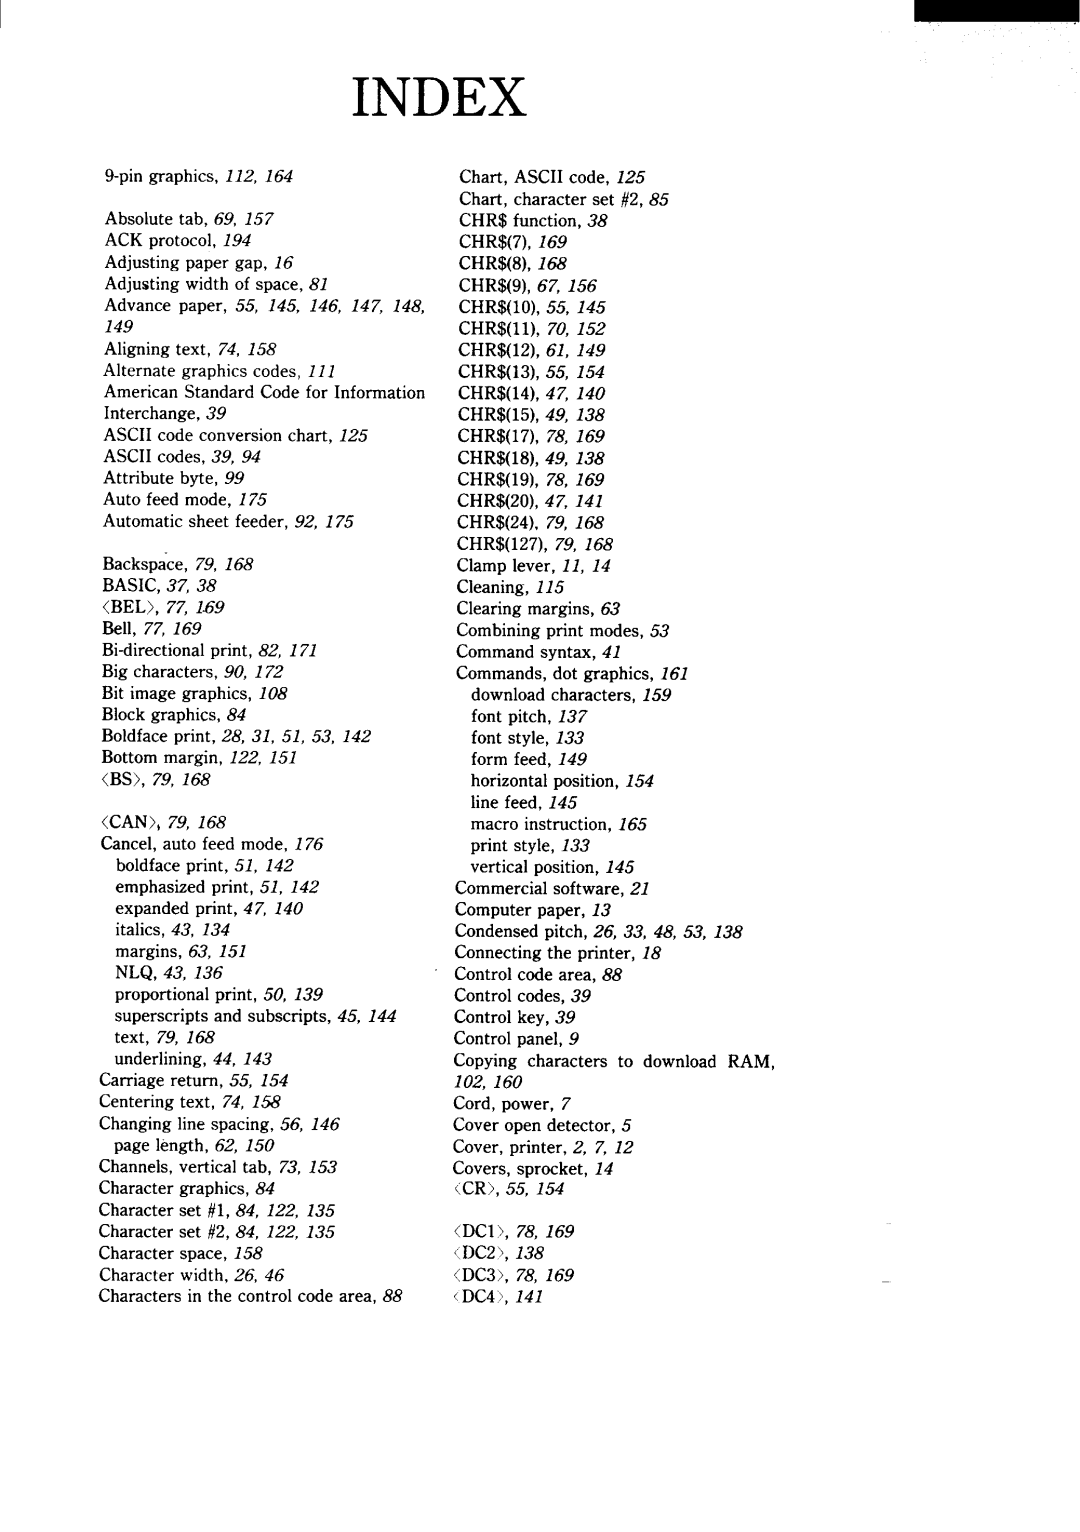 Star Micronics NX-15 user manual Index, pingraphics,112, Attributebyte Autofeed mode 